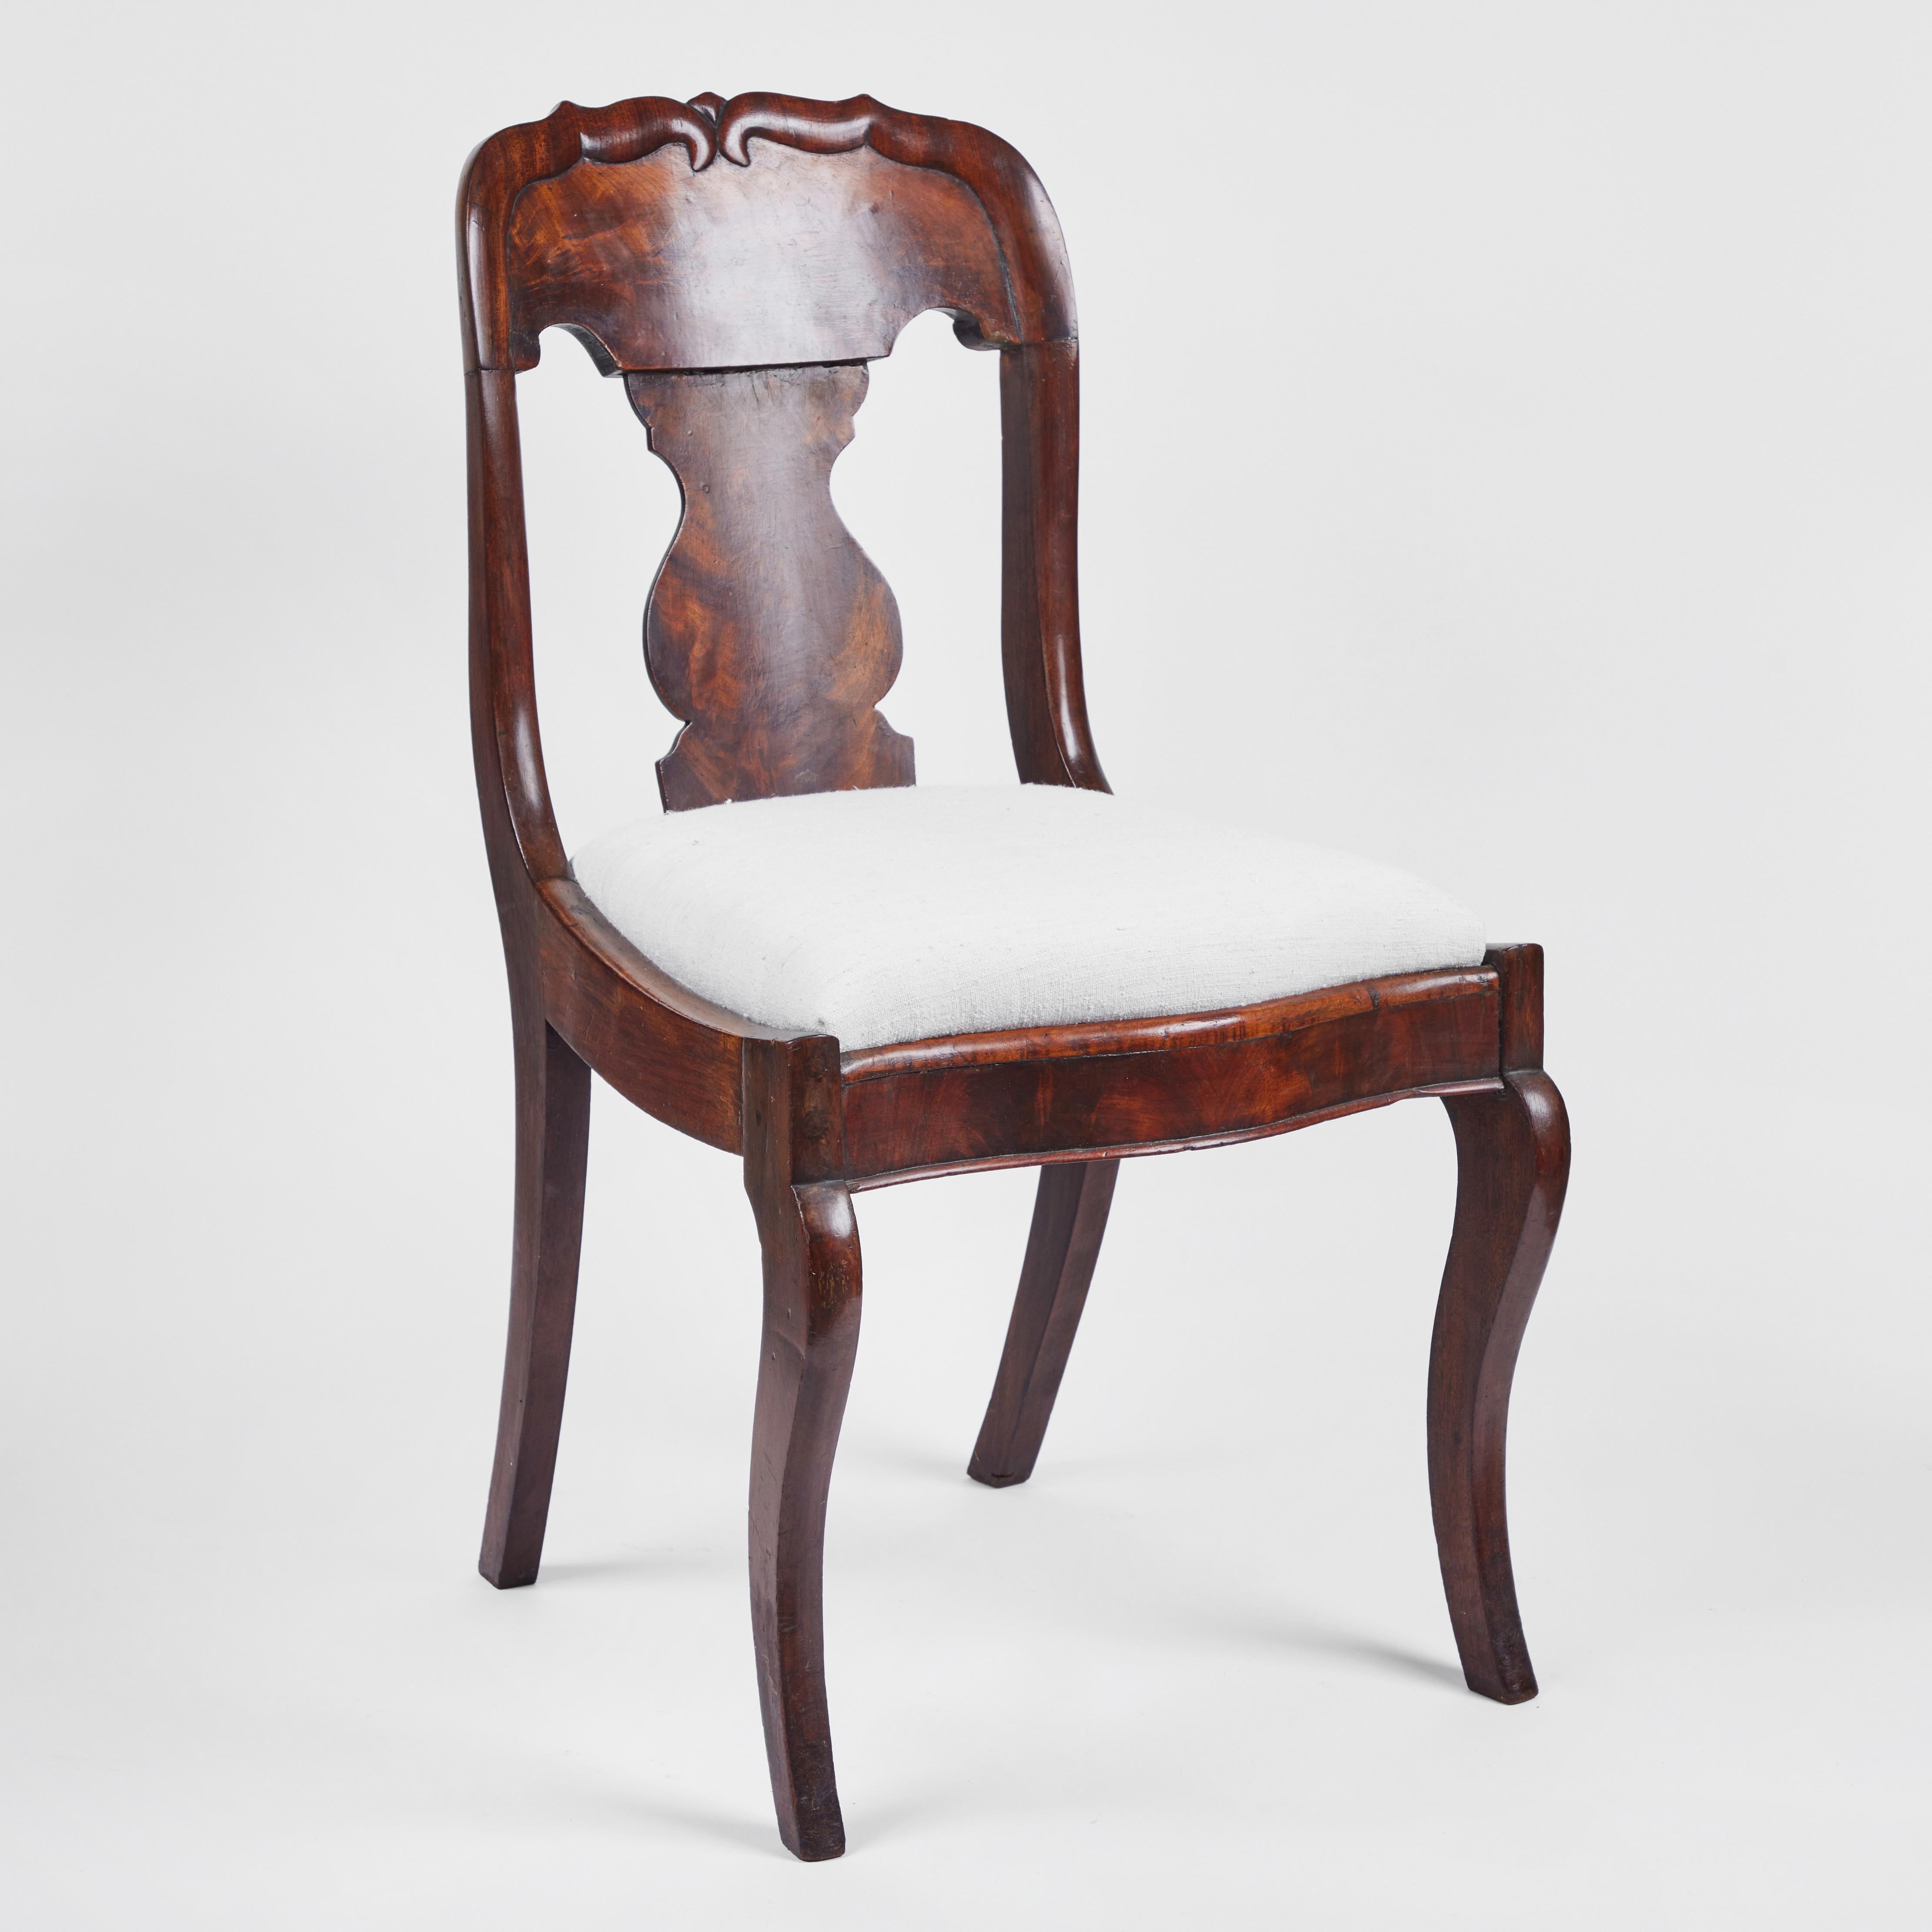 20th Century Antique Queen Anne Style Walnut Burl Wood Chairs Pair